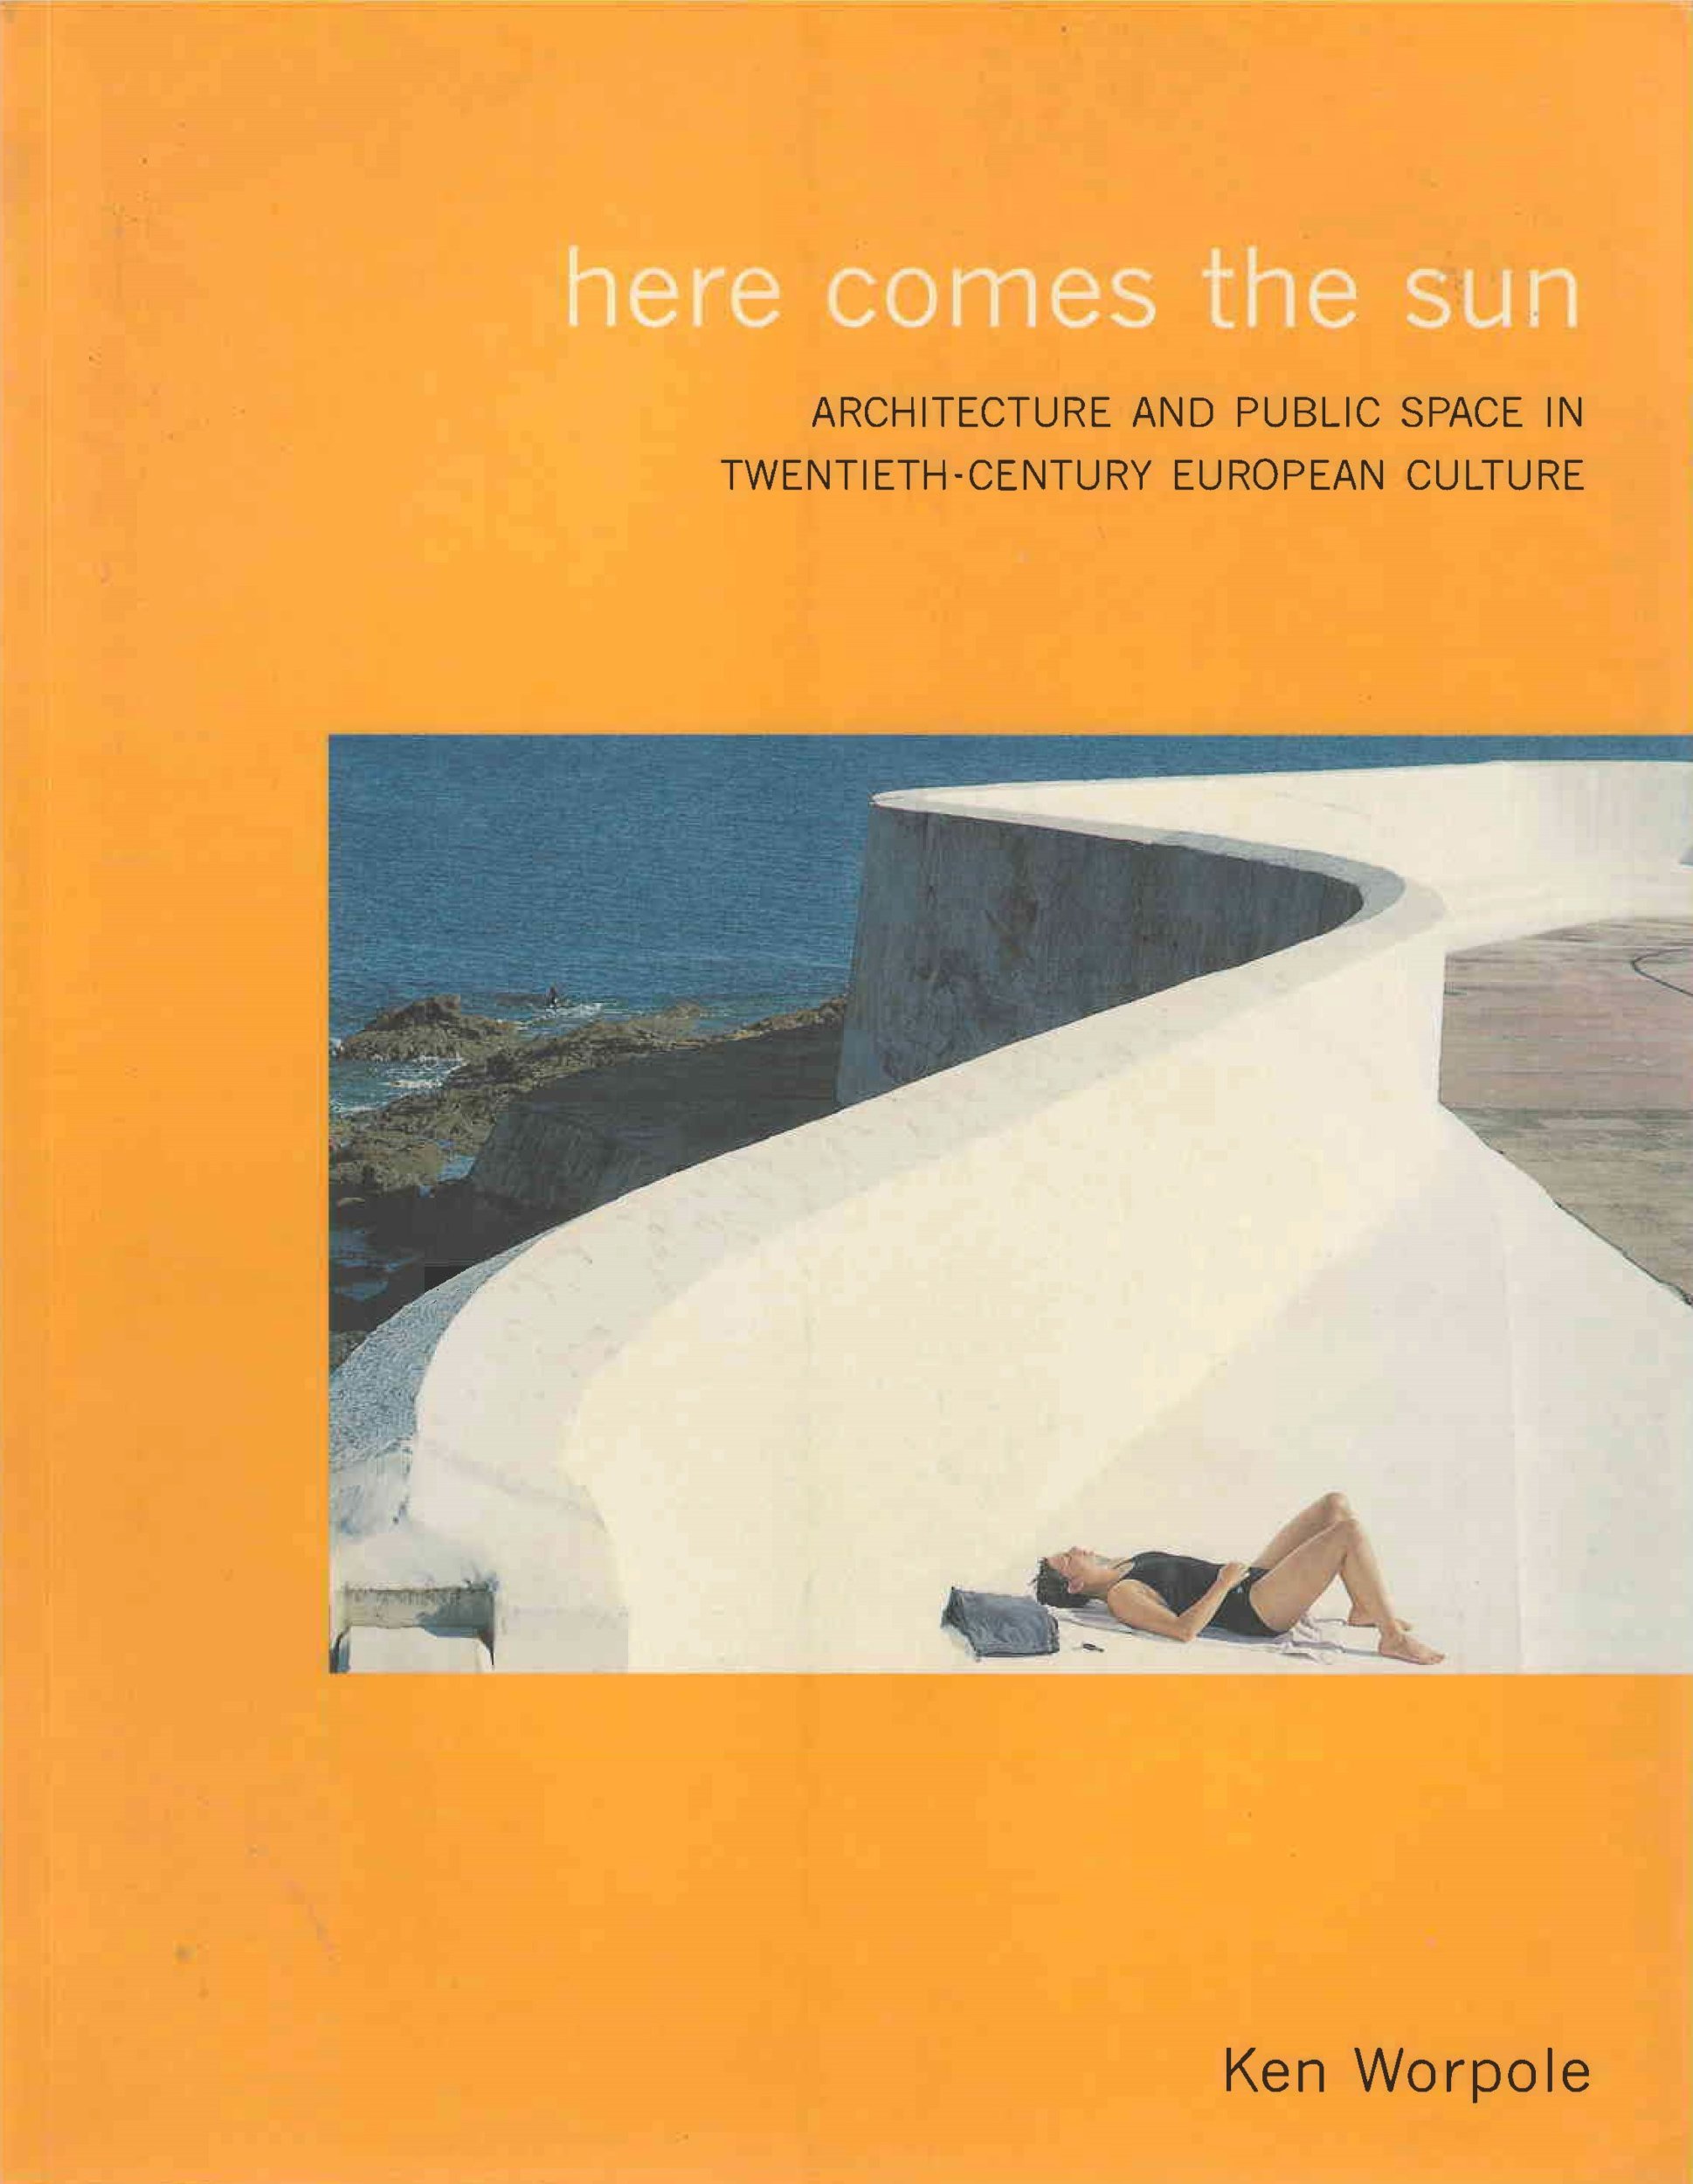 Here comes the sun : architecture and public space in twentieth-century European culture